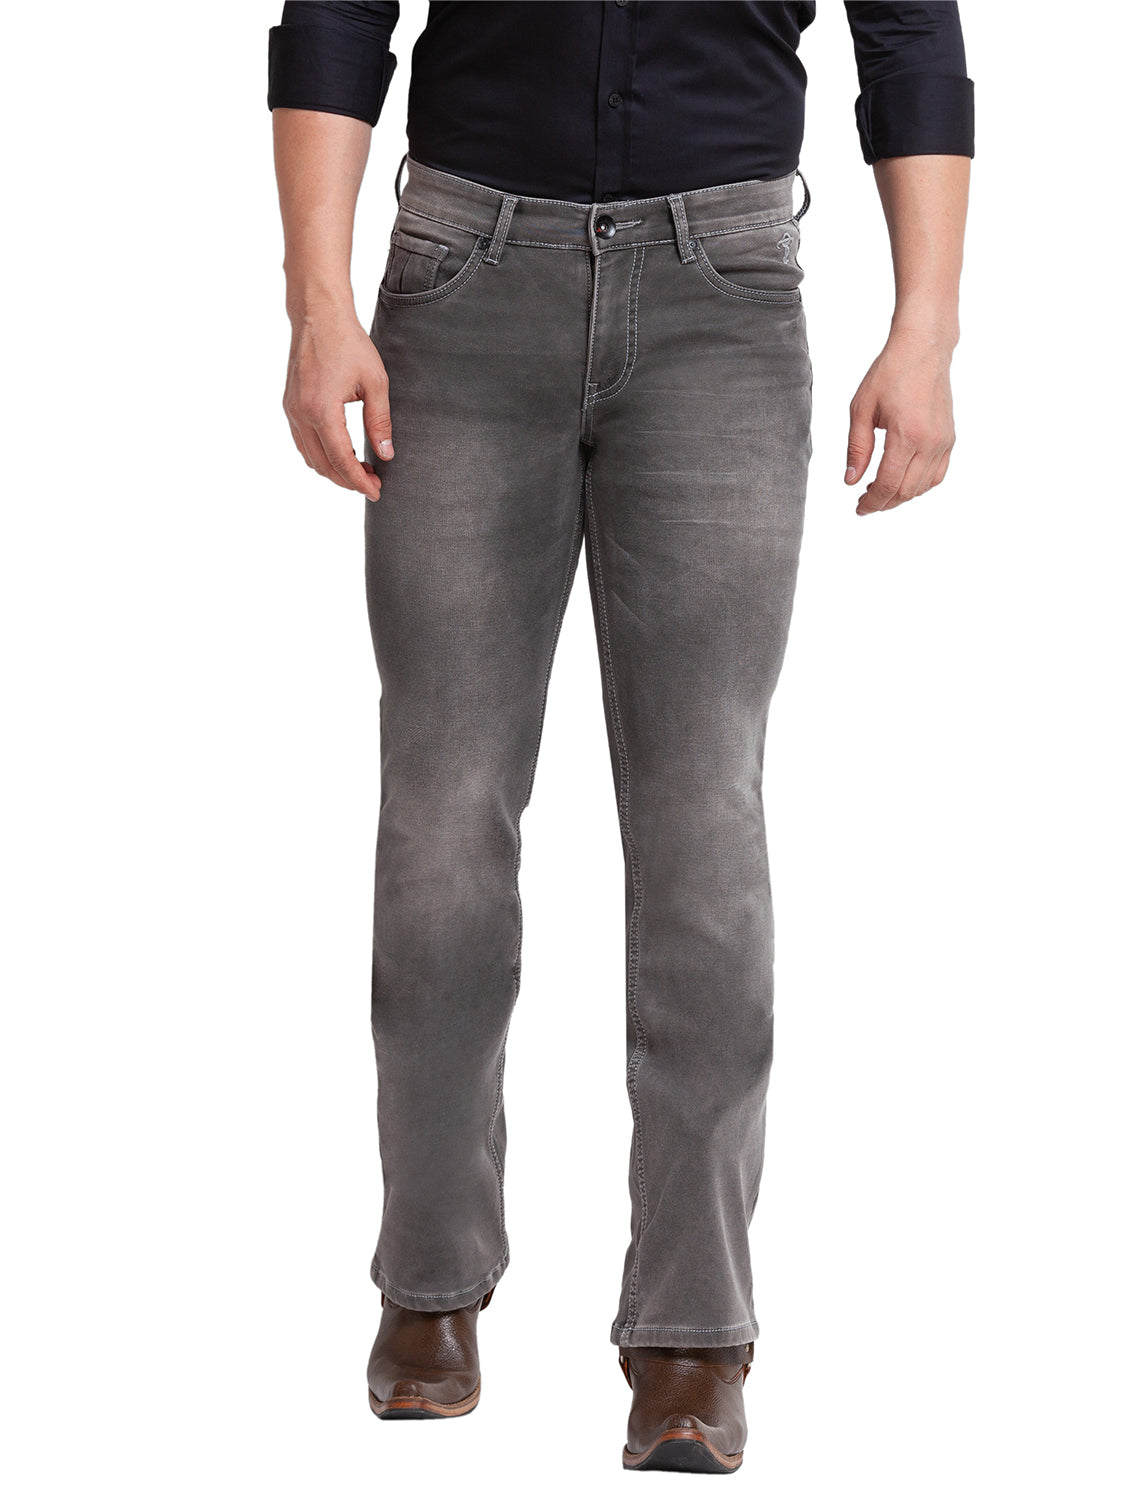 Light Grey Bootcut Jeans for Men